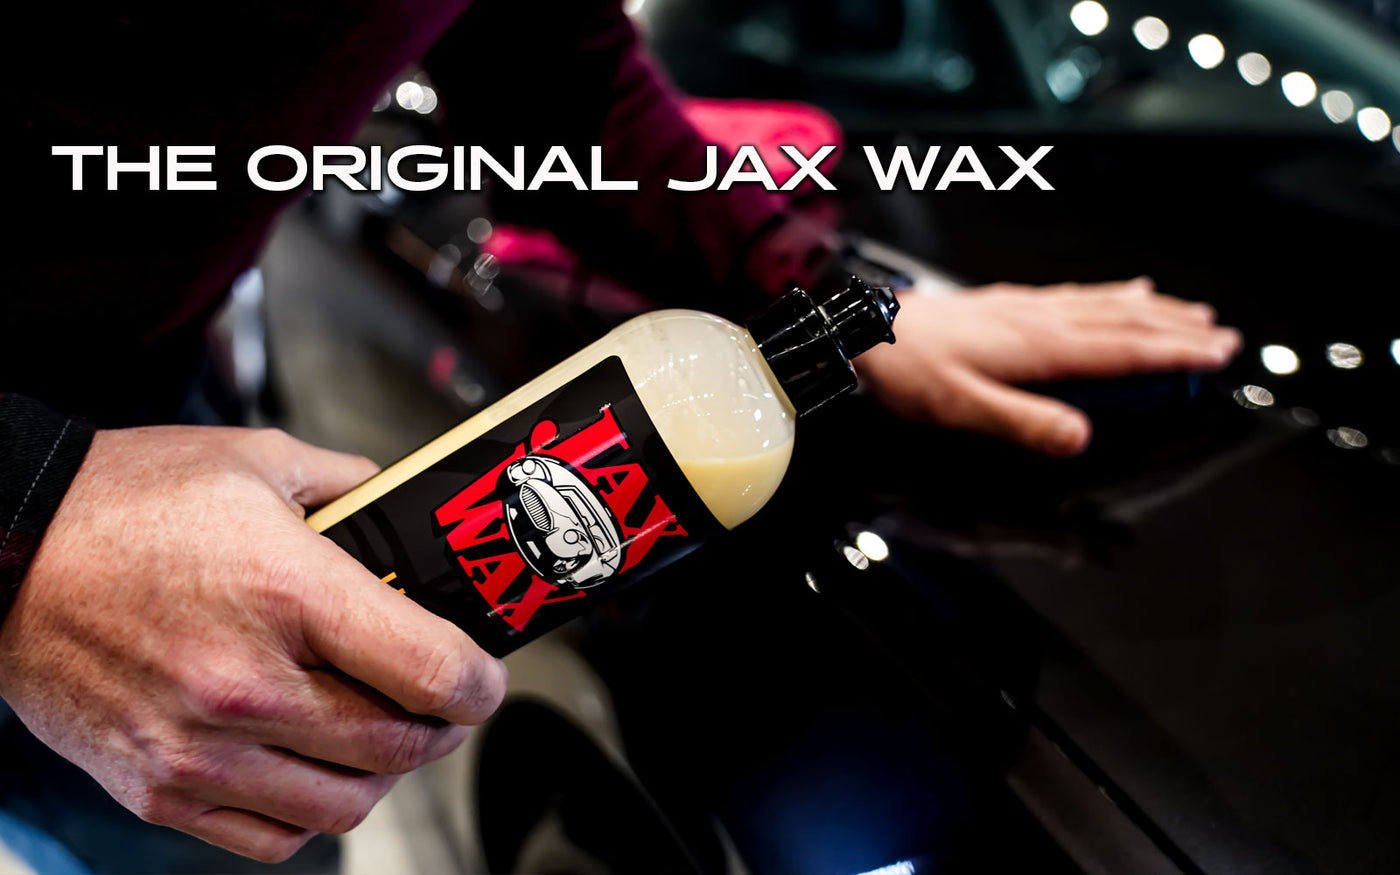 Jax Wax Hawaiian Shine Carnauba Car Wax, Quick Detail Spray for a Deep  Gloss Finish on Car, Boat, Truck, Motorcycle and More - 16 Ounce